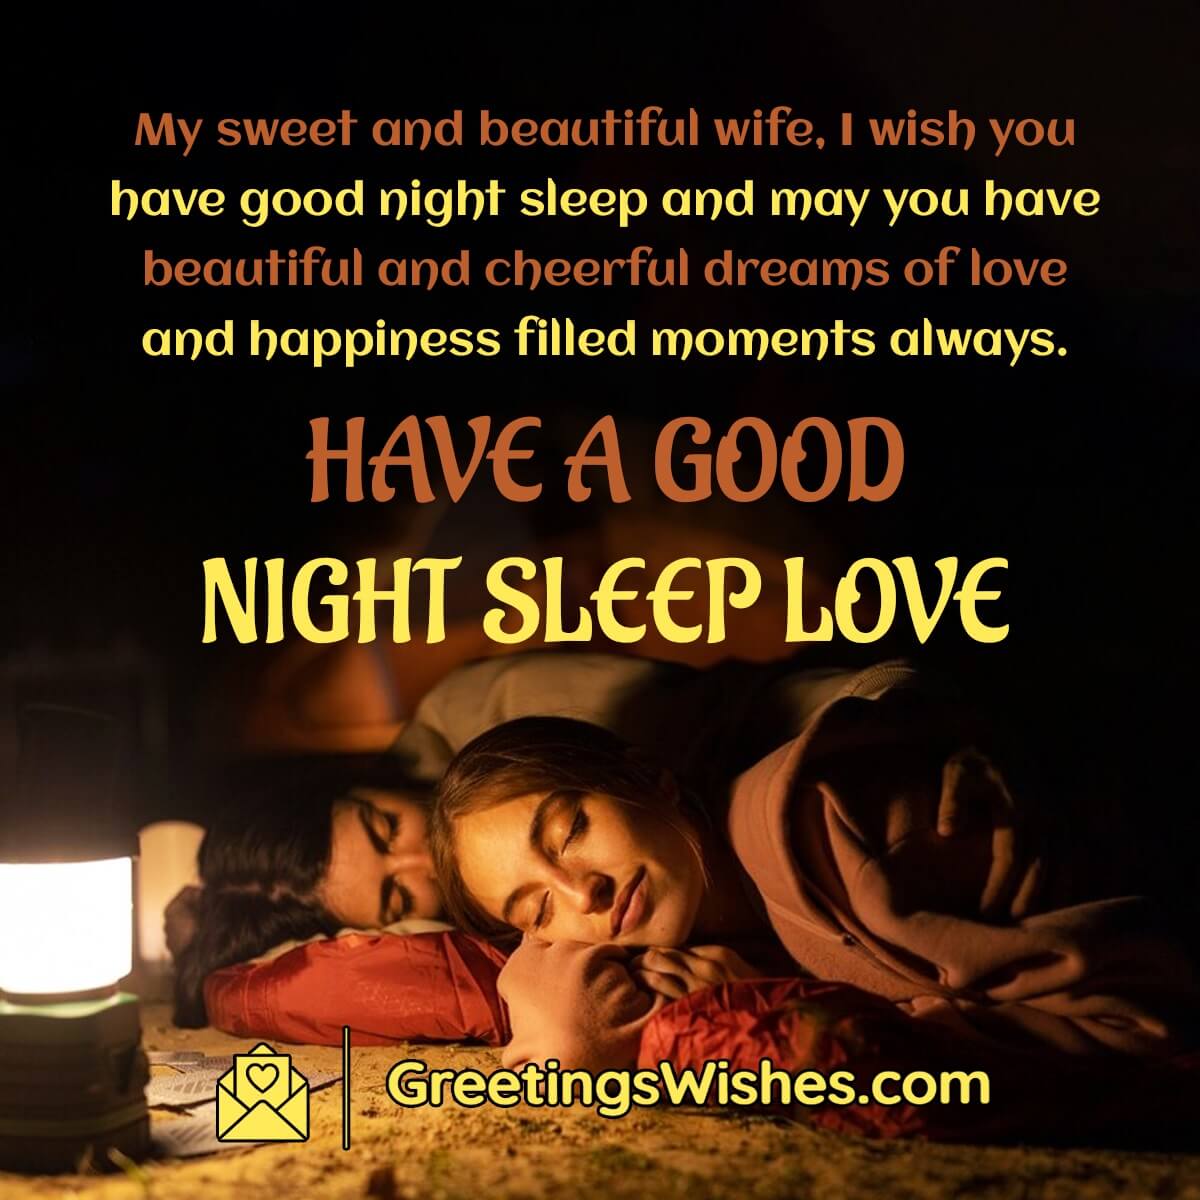 Good Night - Greetings Wishes